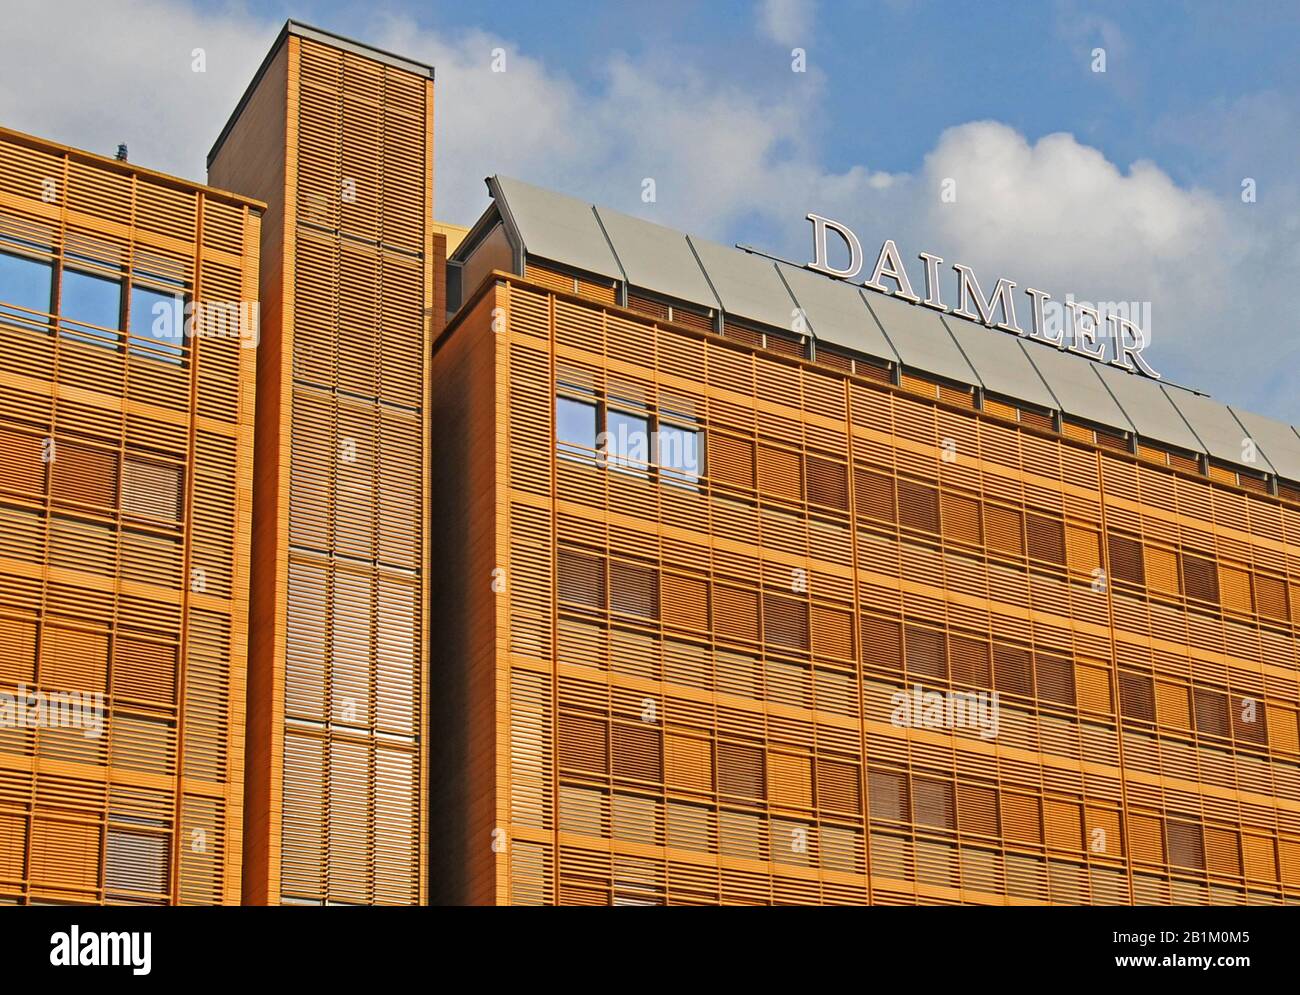 Siège des services financiers Daimler, Berlin, Allemagne Banque D'Images